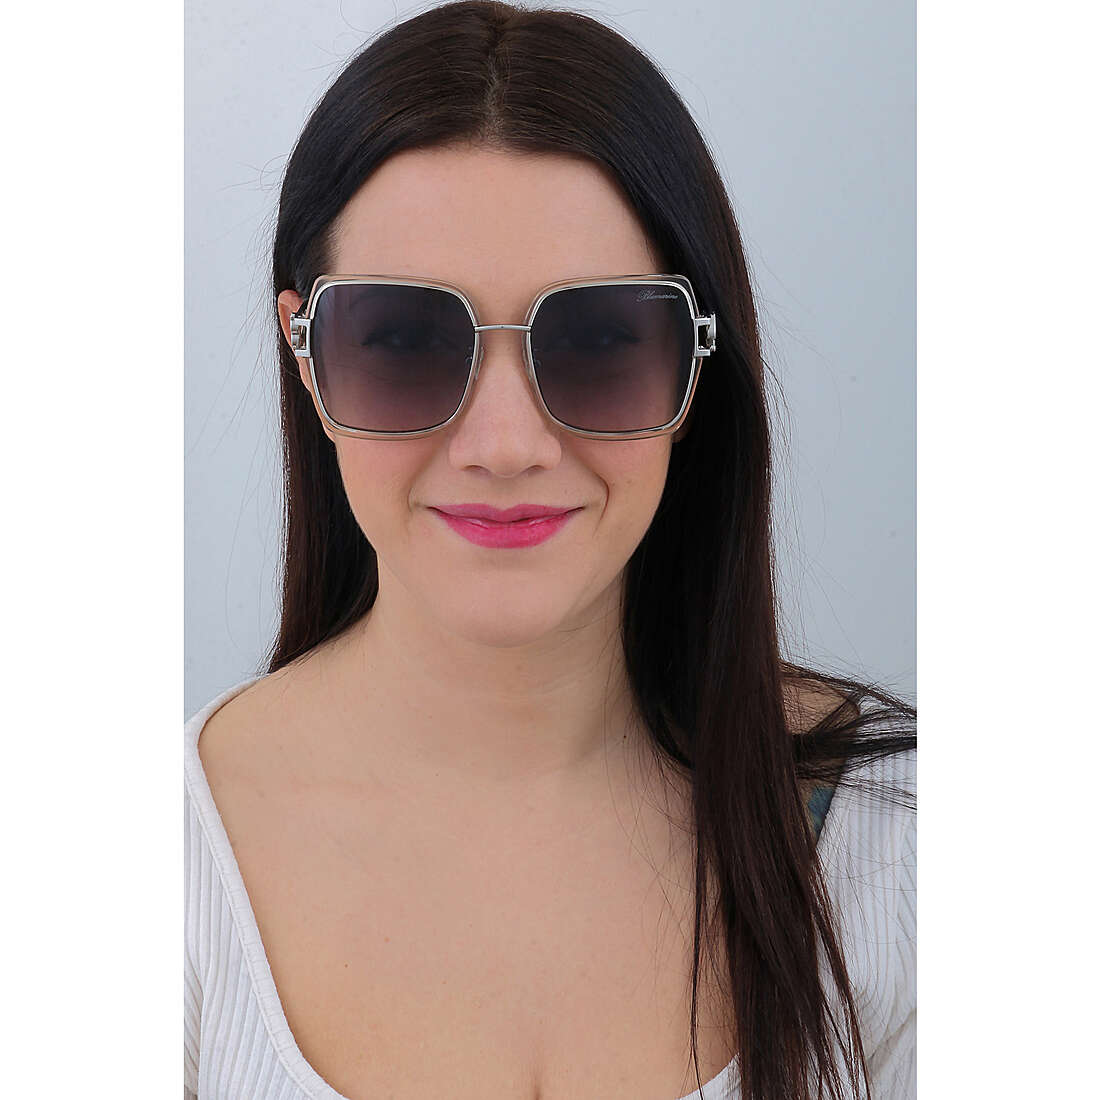 Blumarine occhiali da sole donna SBM1950579 indosso